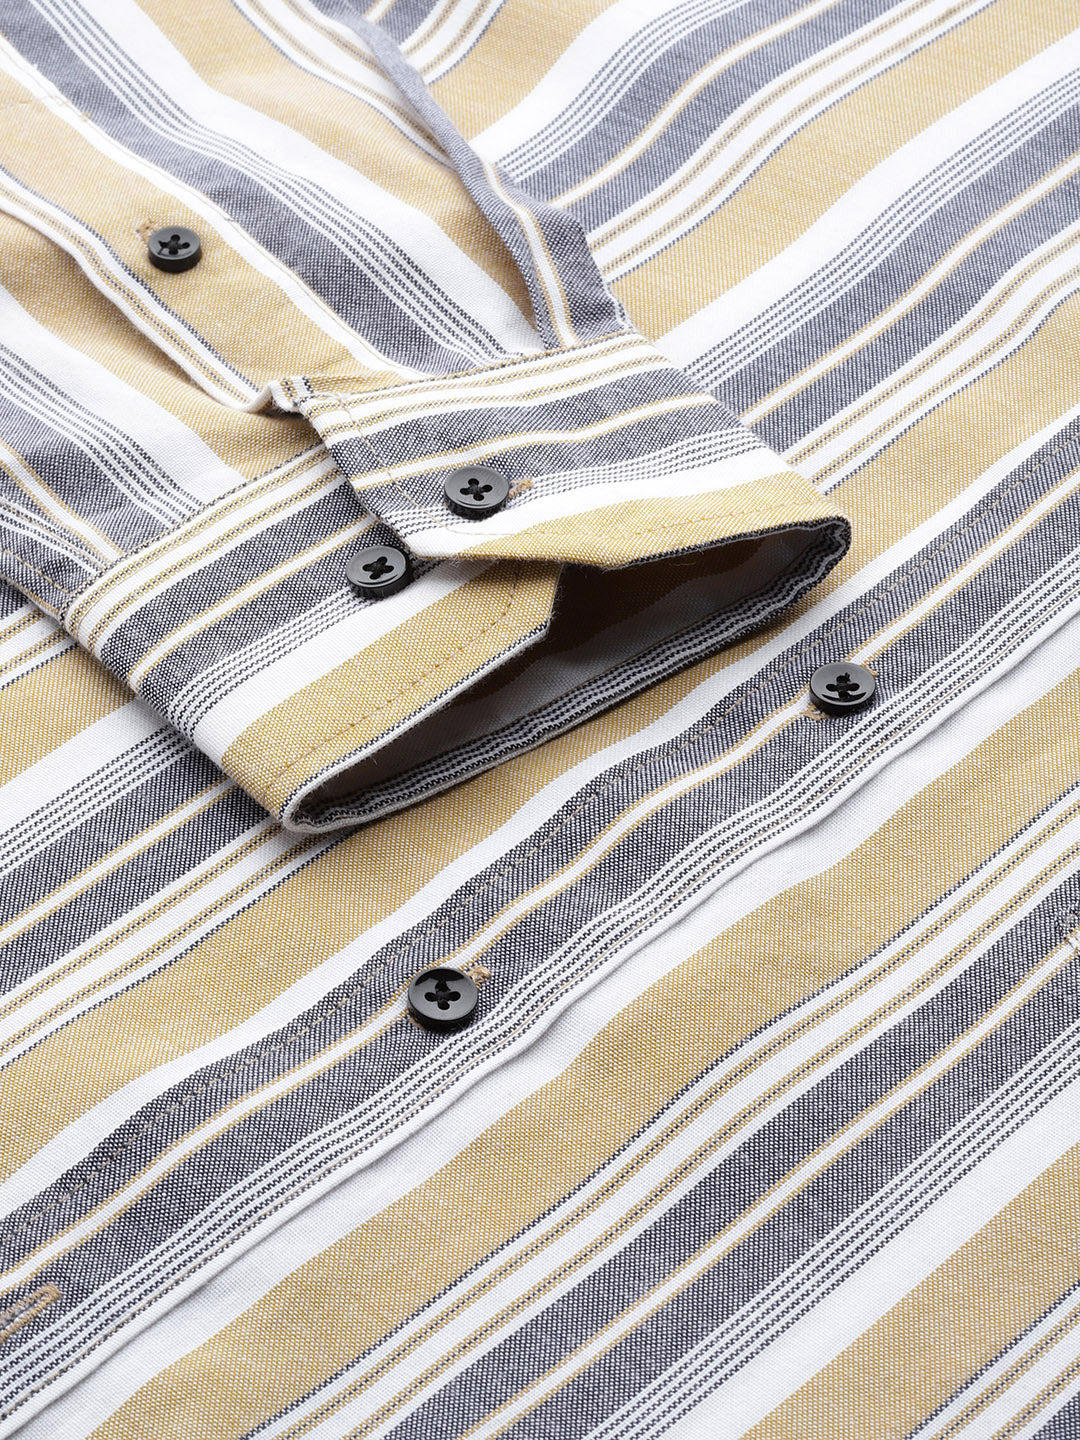 Smart Slim Fit Striped Formal Shirt